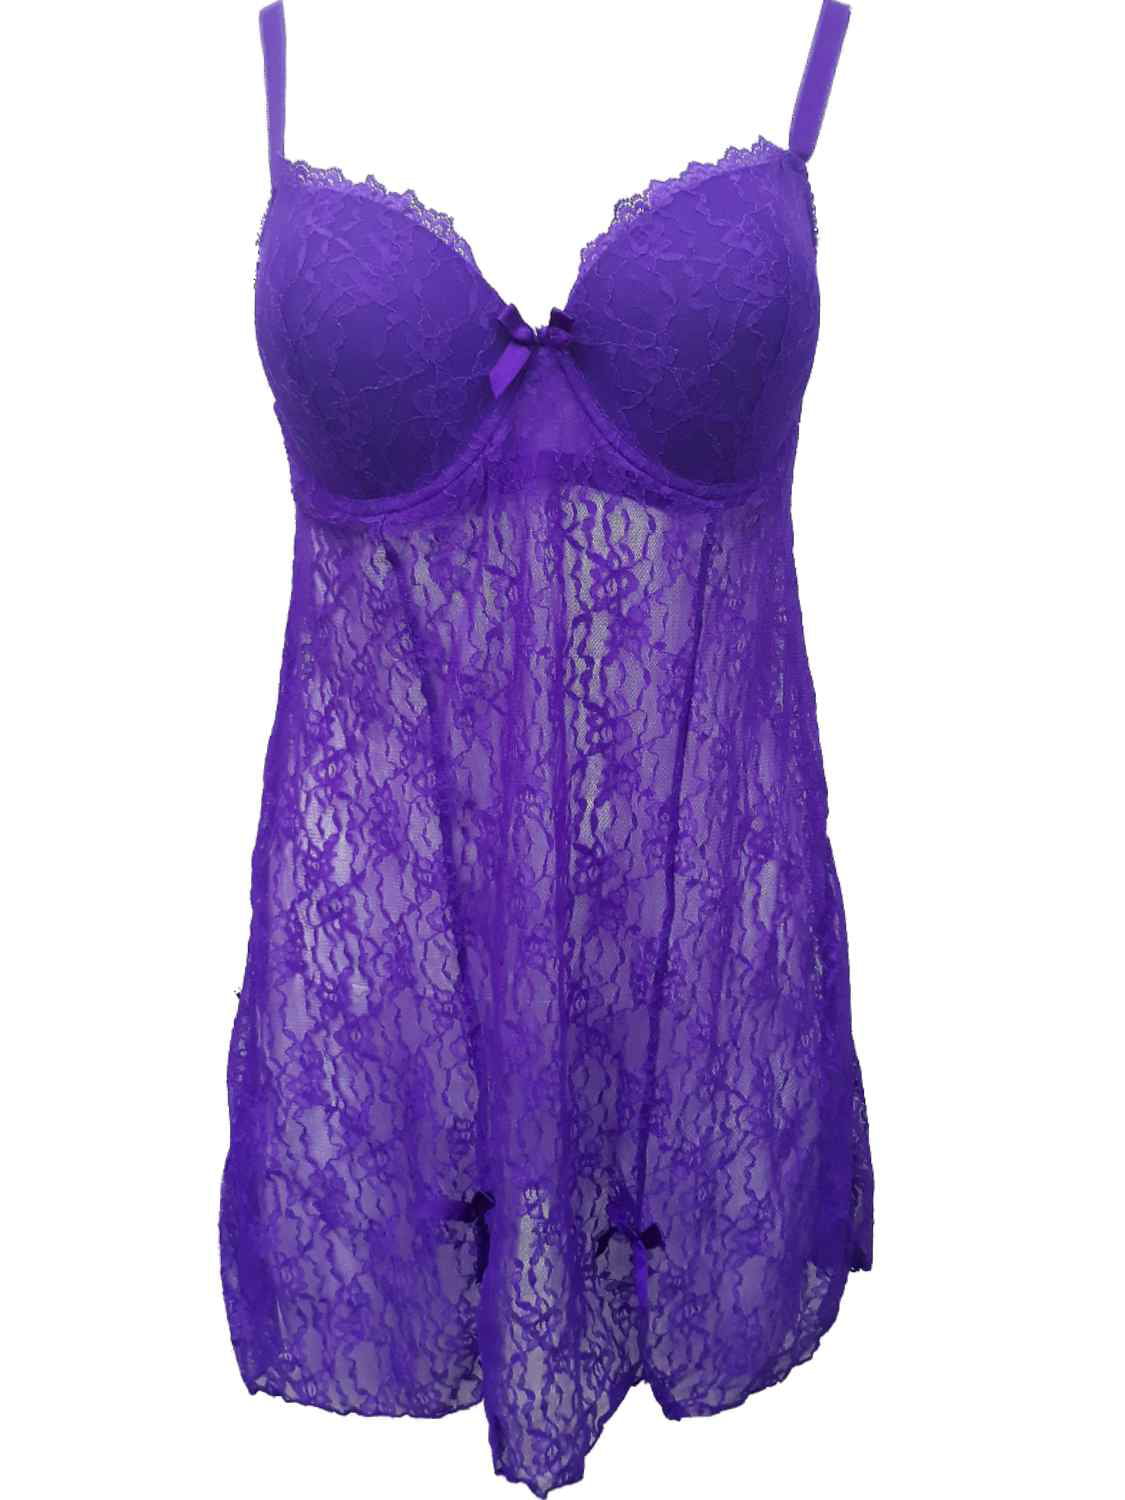 Satin Baby Doll Chemise Women's Nightie Soft Purple Lace Negligee Nightdress 